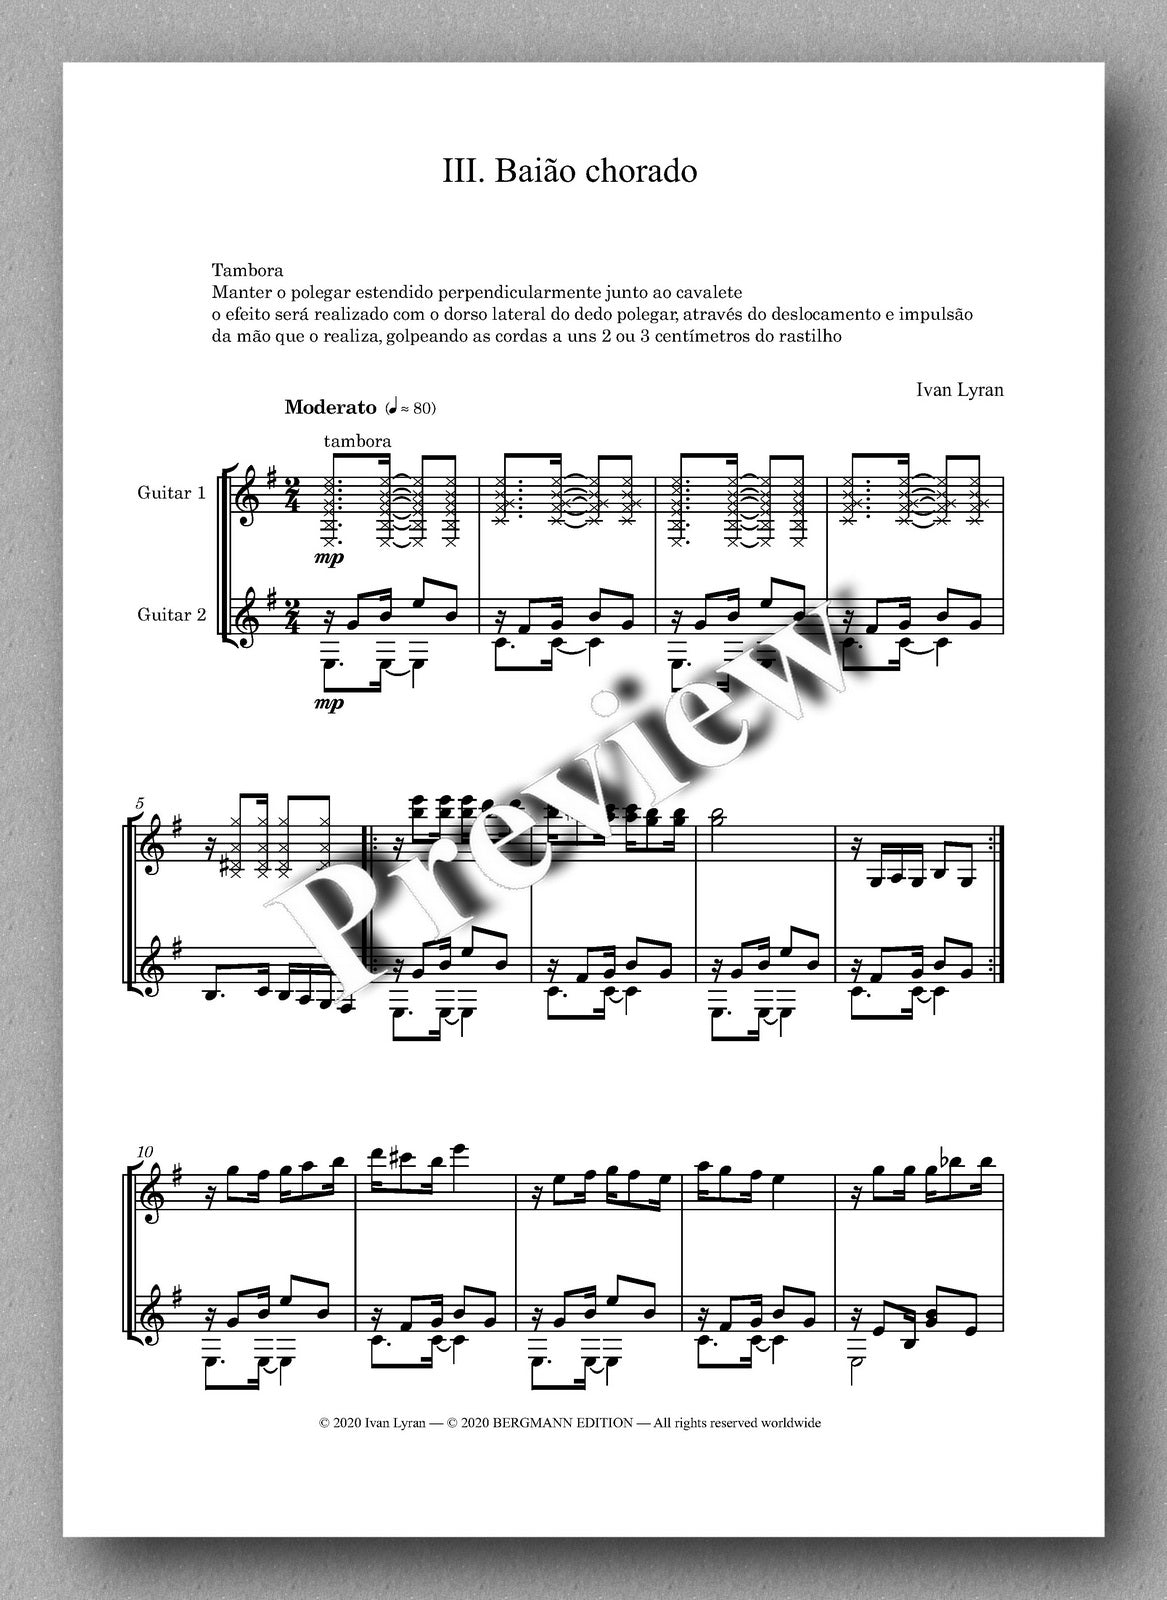 Ivan Lyran, Três Peças Brasileiras, Opus 22 - preview of the music score 3